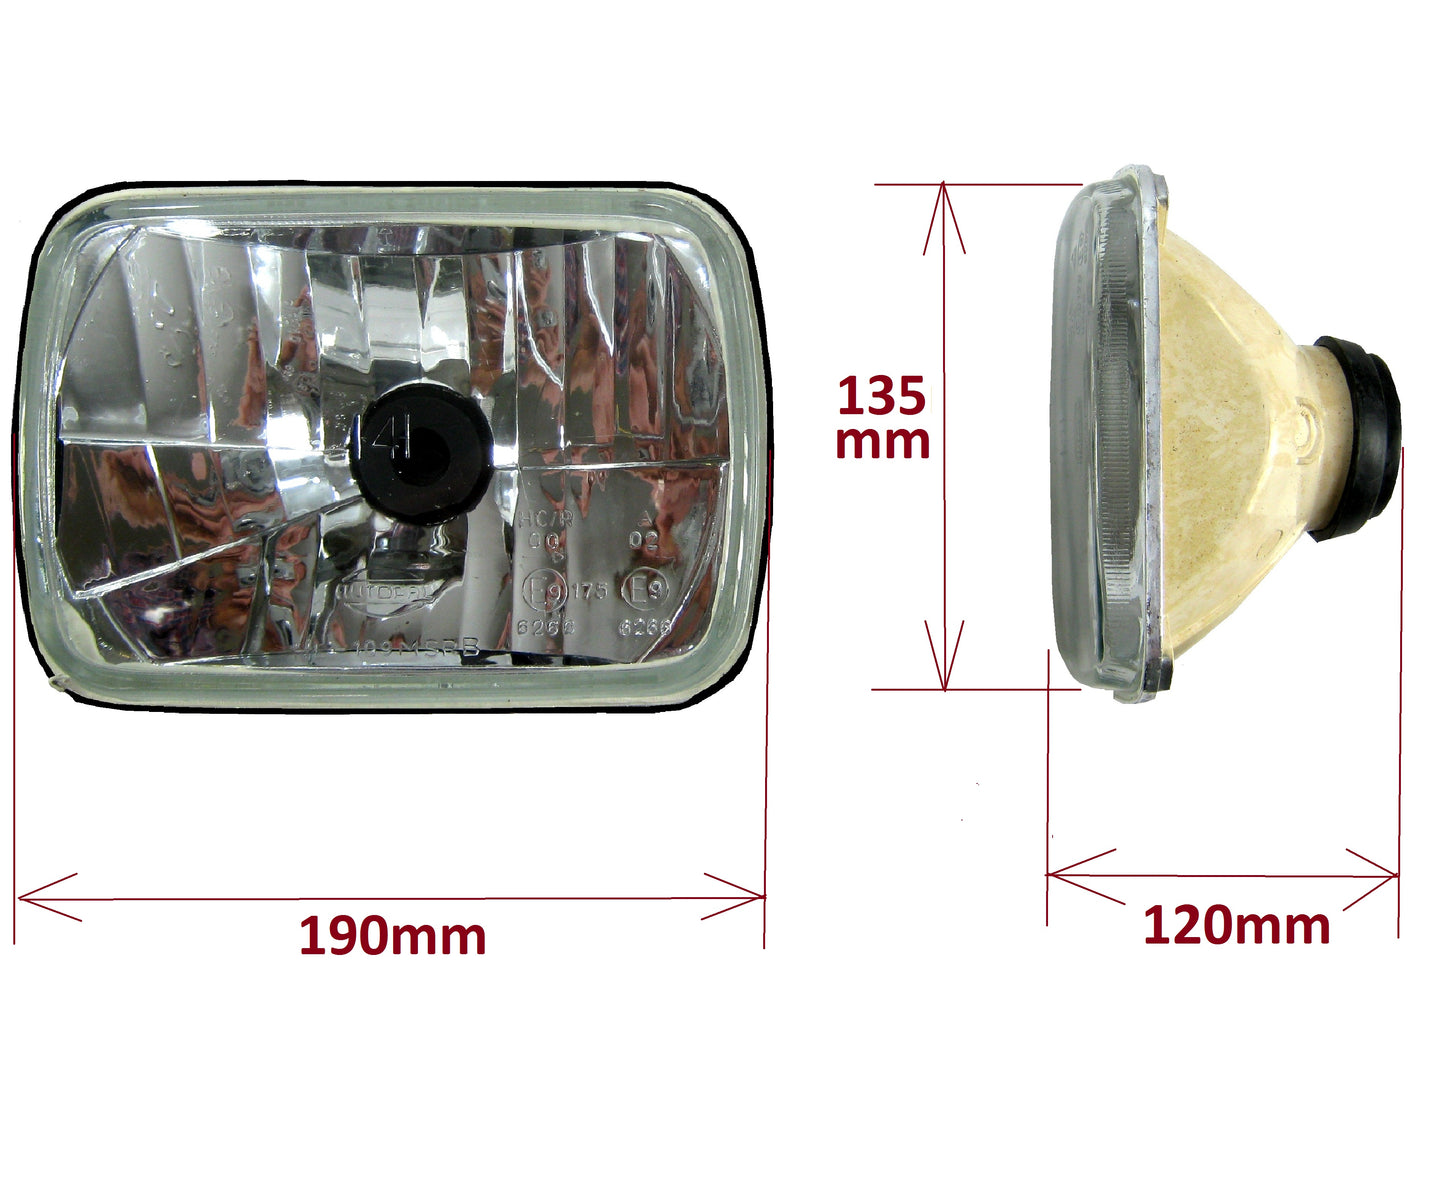 Crystal Headlight Upgrade (Pair) with E Mark - RHD - Toyota Hilux Mk4